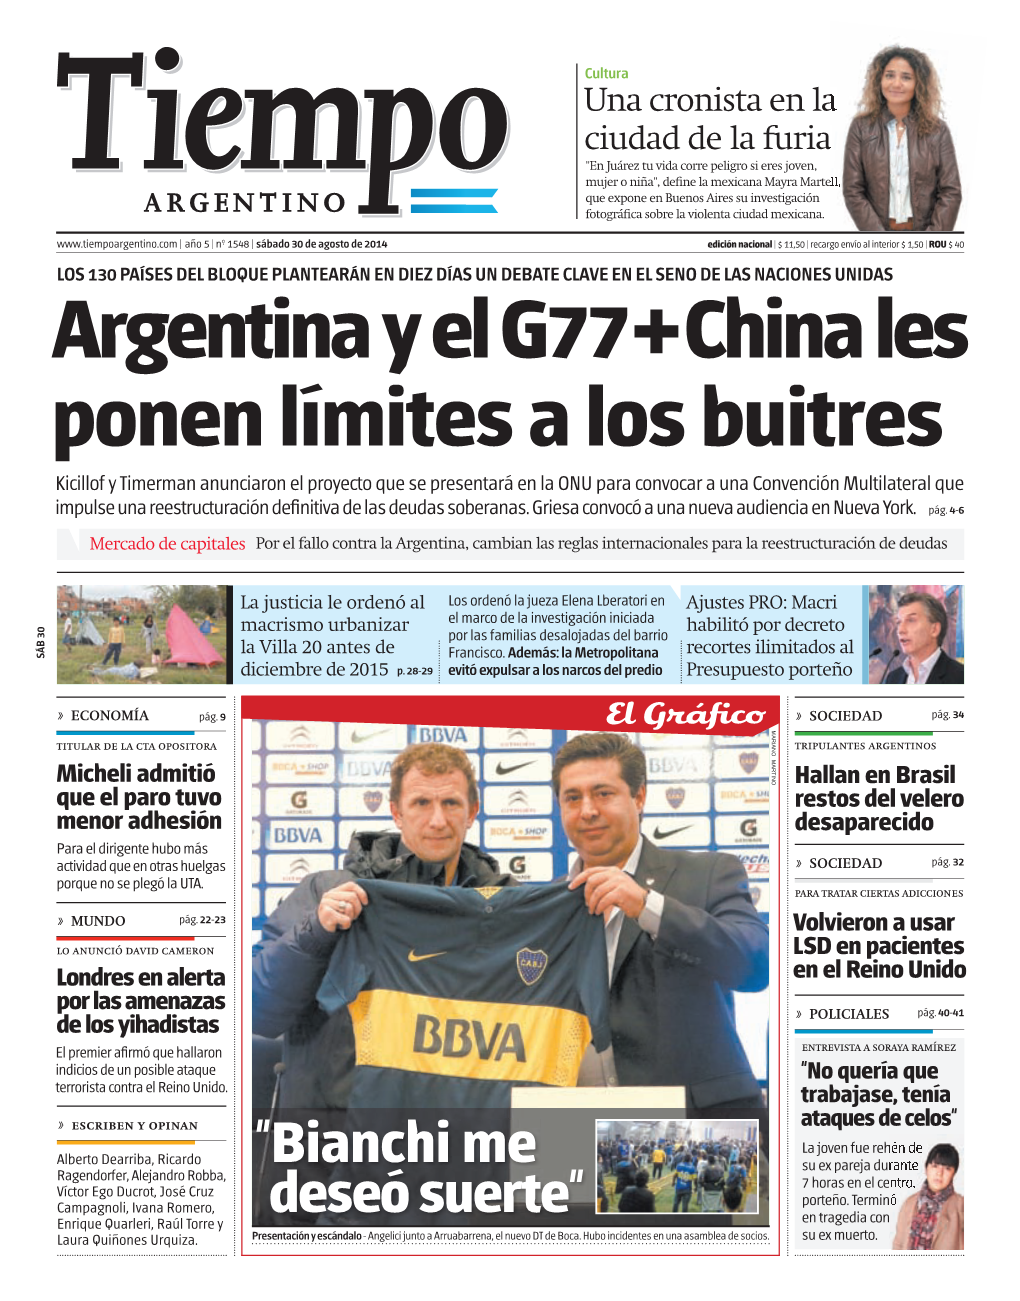 Argentina Y El G77 China Les Ponen Límites a Los Buitres